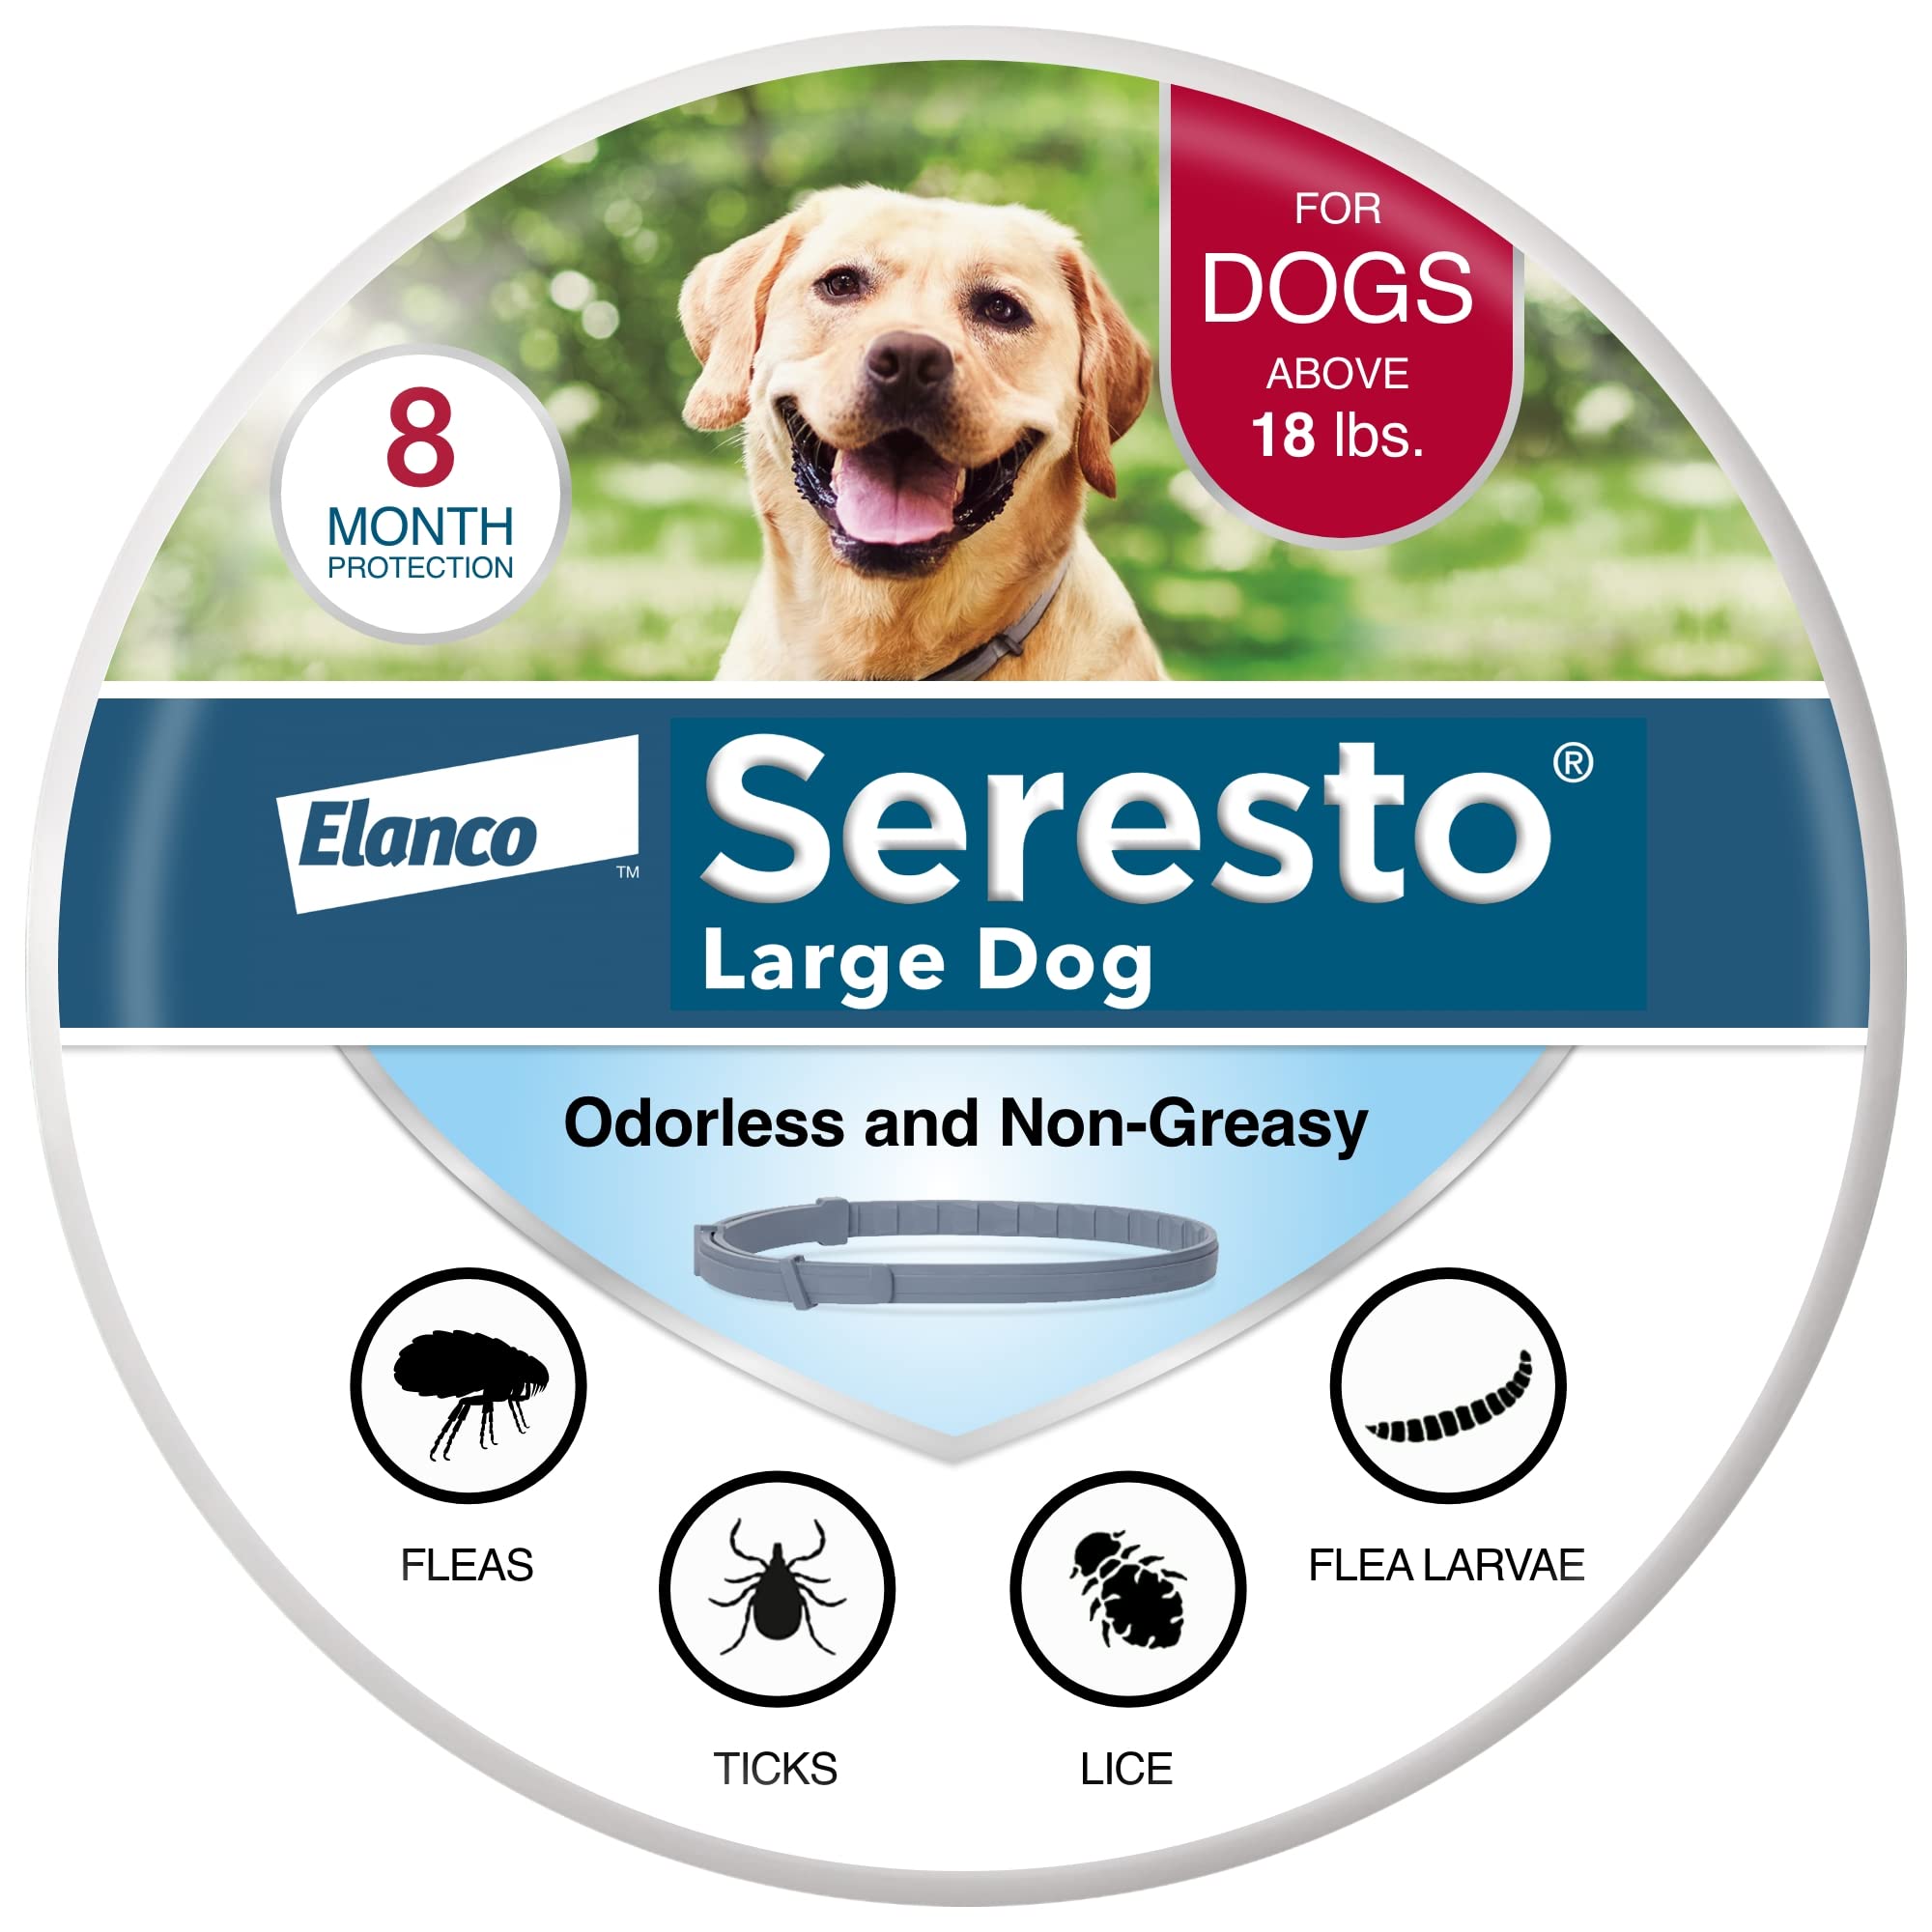 Seresto Large Dog Vet-Recommended Flea & Tick Treatment...